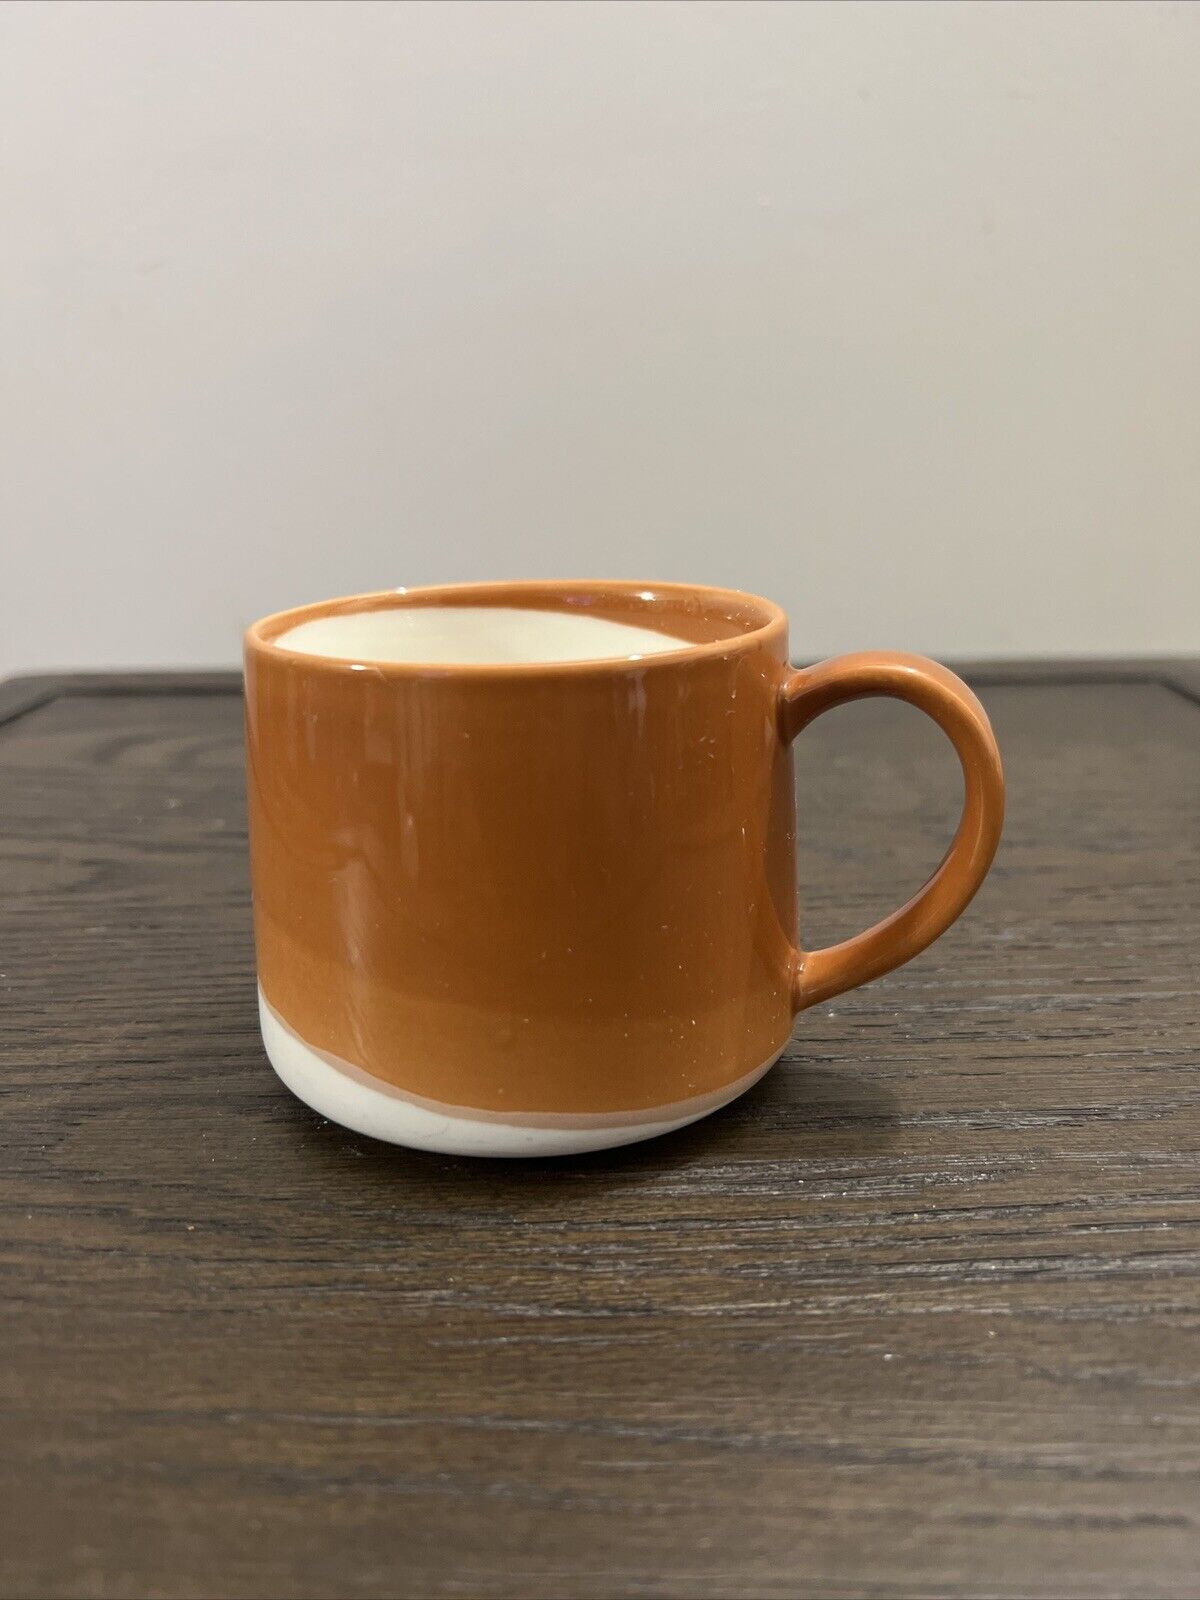 Starbucks 2014 Ombre Honey Brown and White Glaze Coffee Mug Cup Ceramic 10 oz